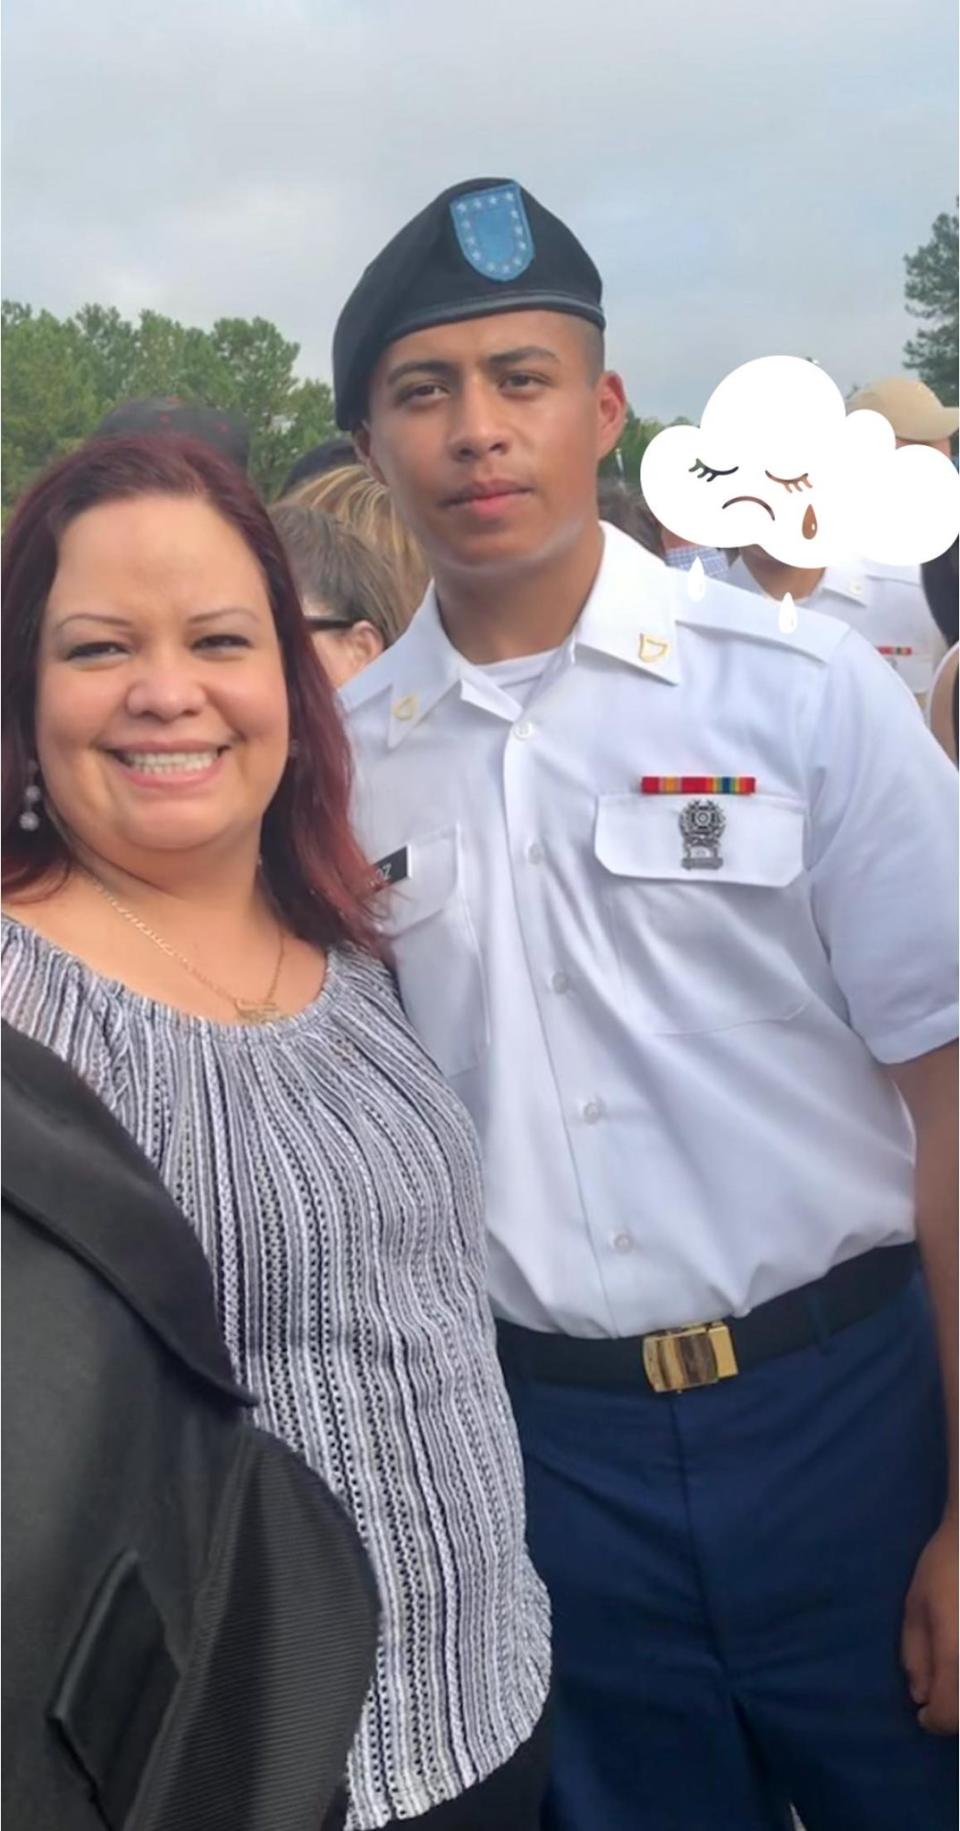 Juan and his mother, Elizabeth Rivera. (Help Find Juan Mu?oz Facebook page)